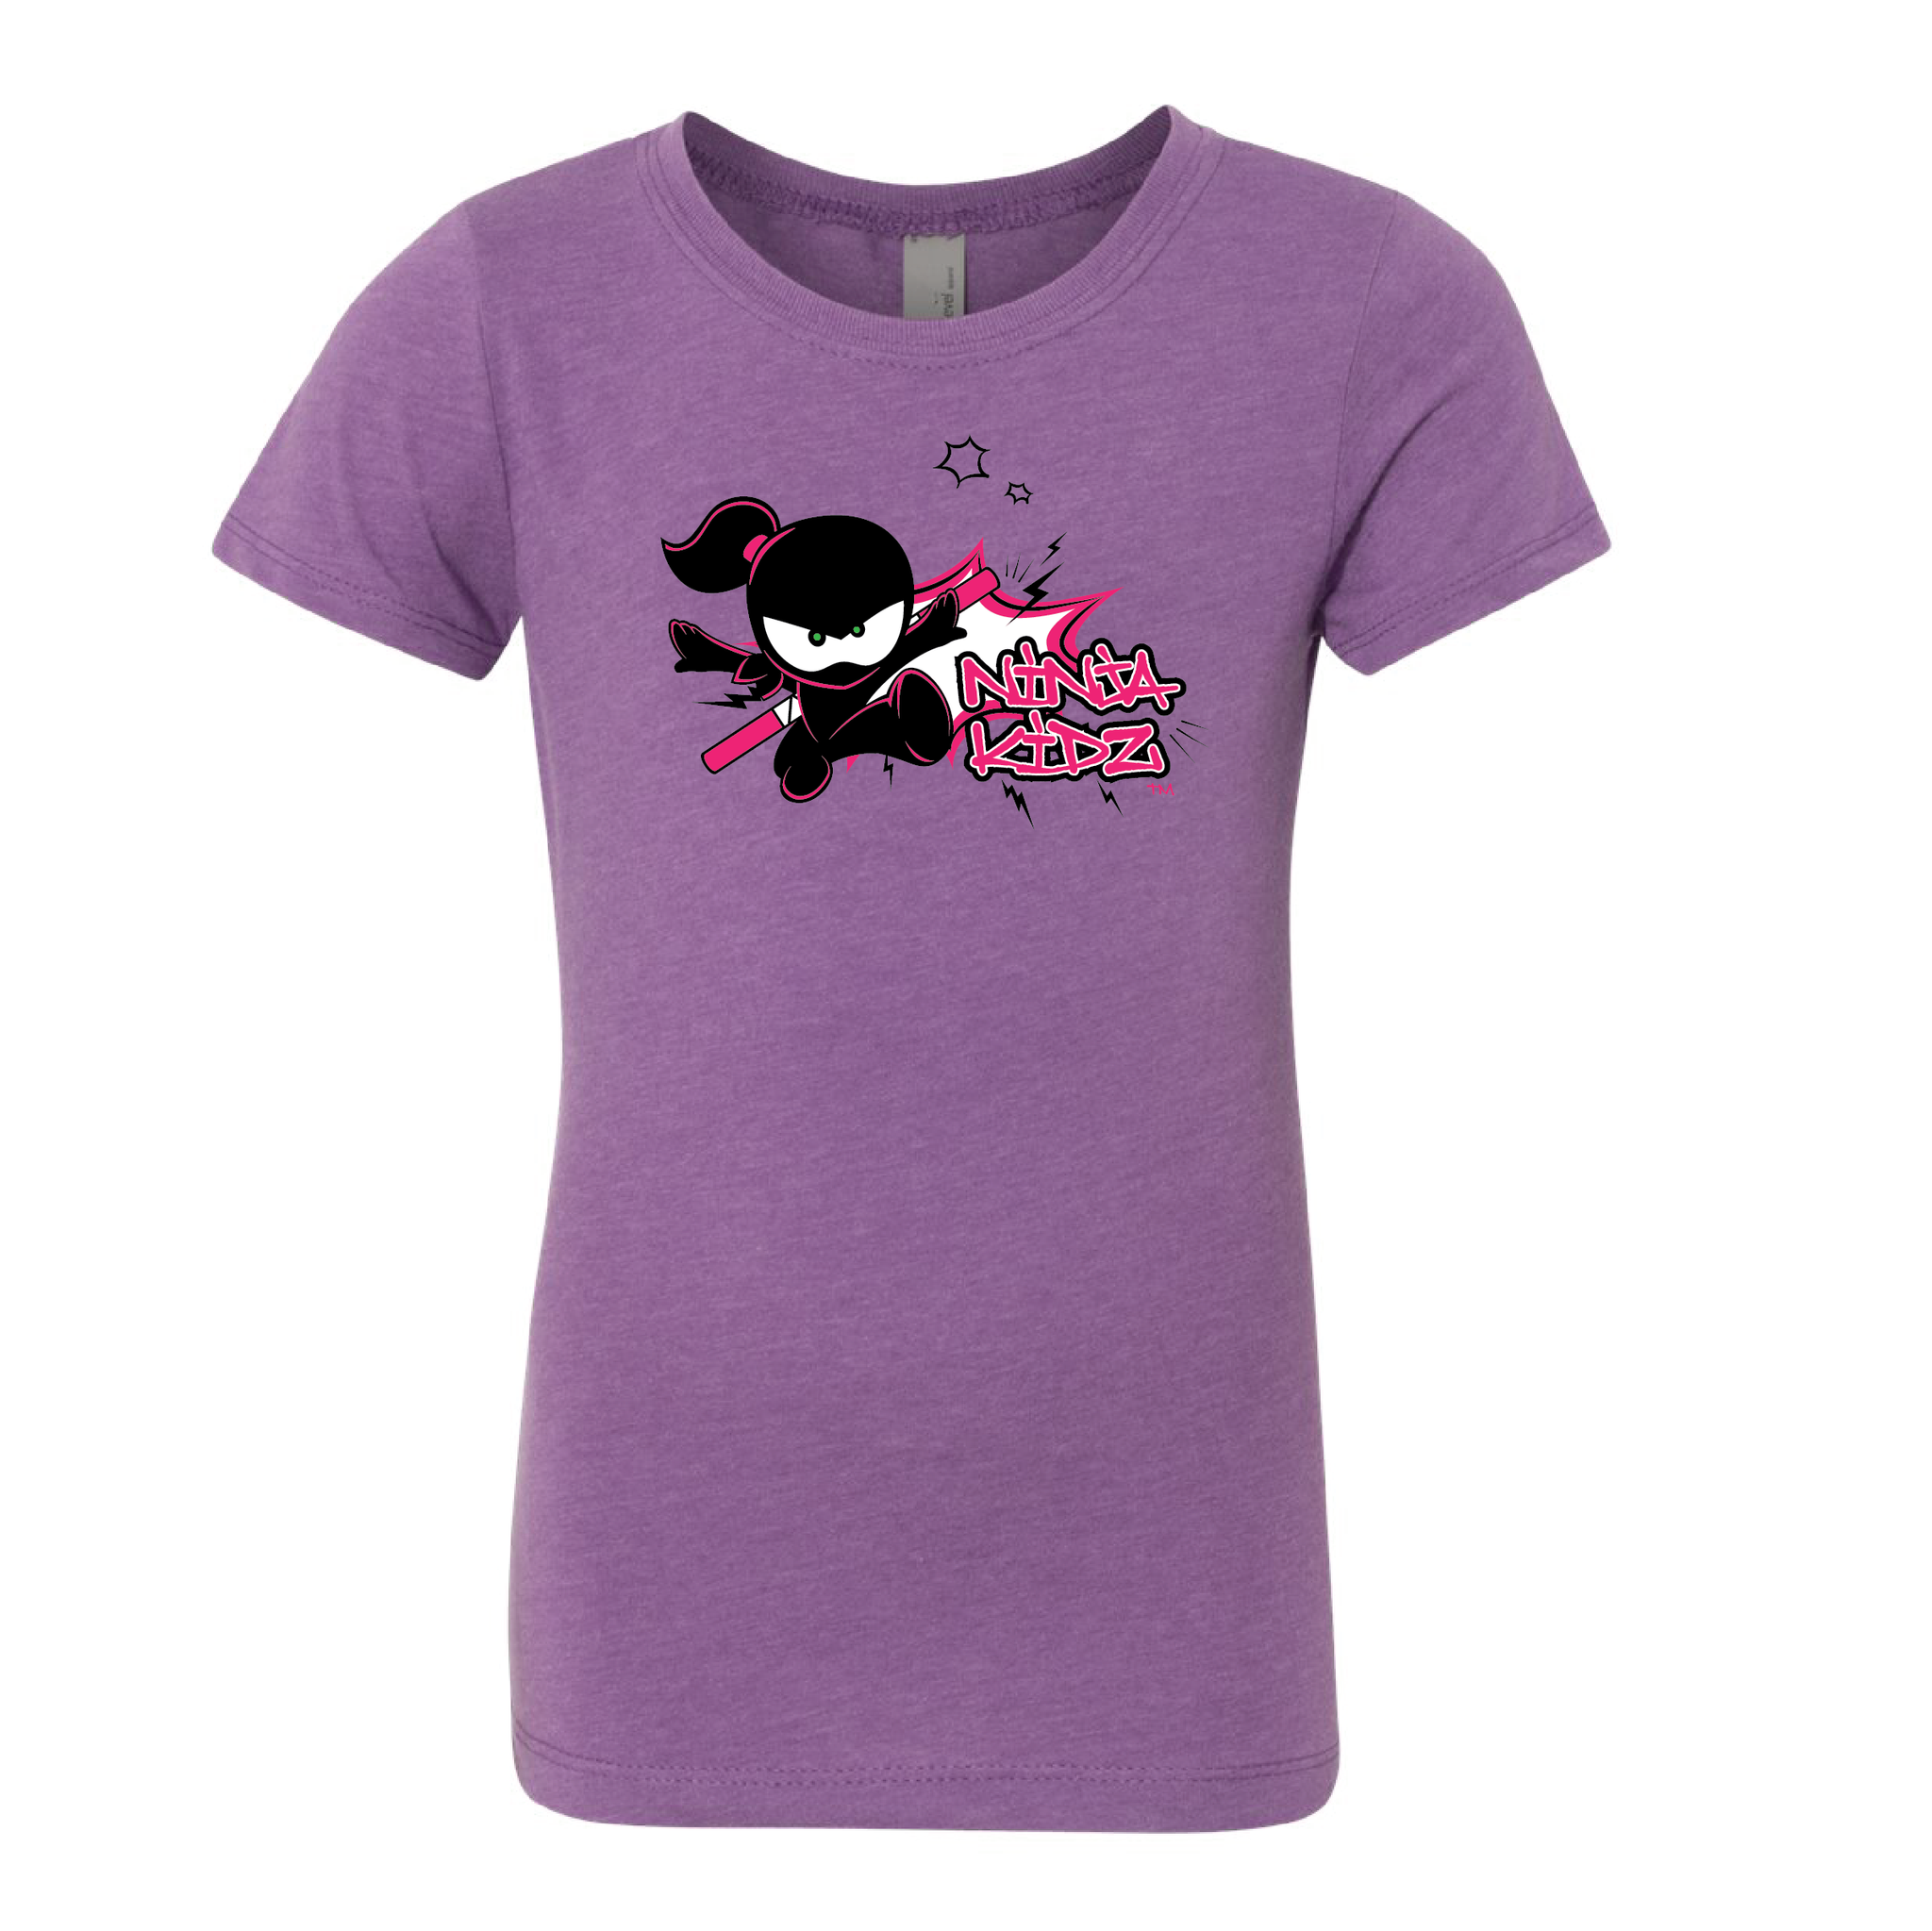 Ninja Kidz Spark Girl T-Shirt 3.0 ©